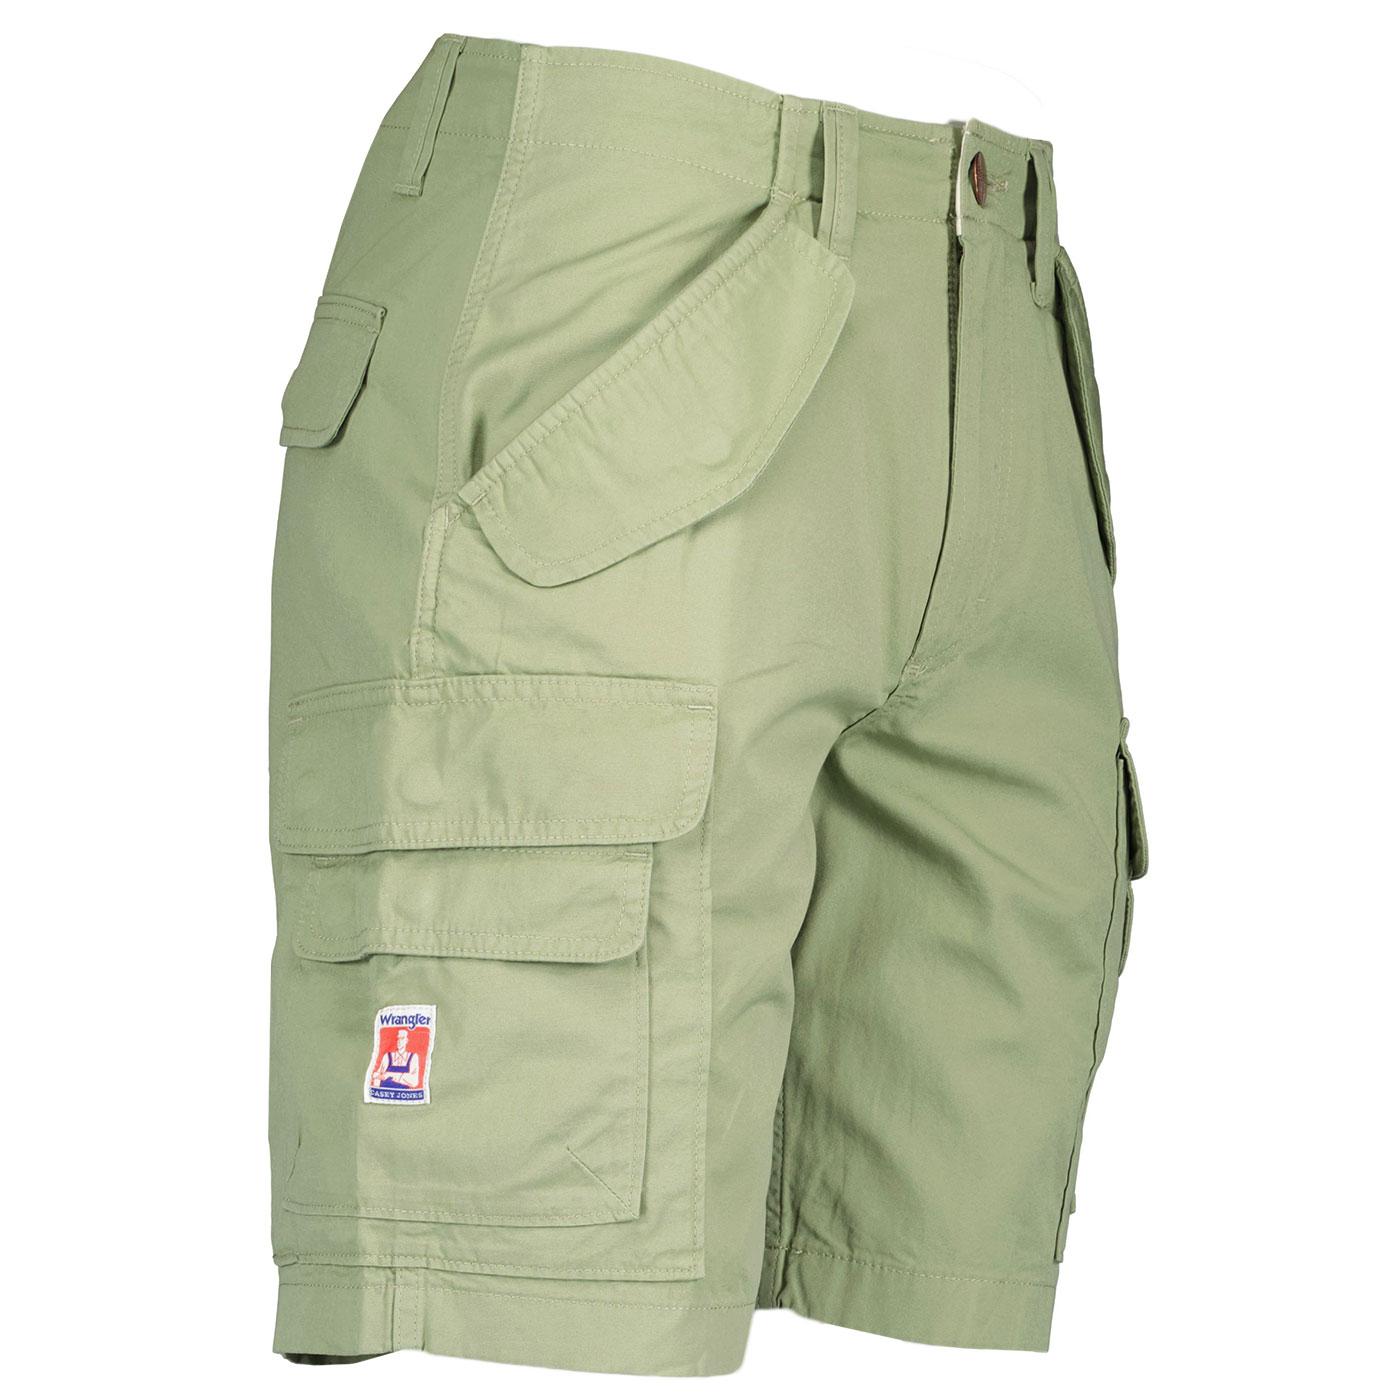 Casey Jones Wrangler Retro Cargo Shorts in Tea Leaf